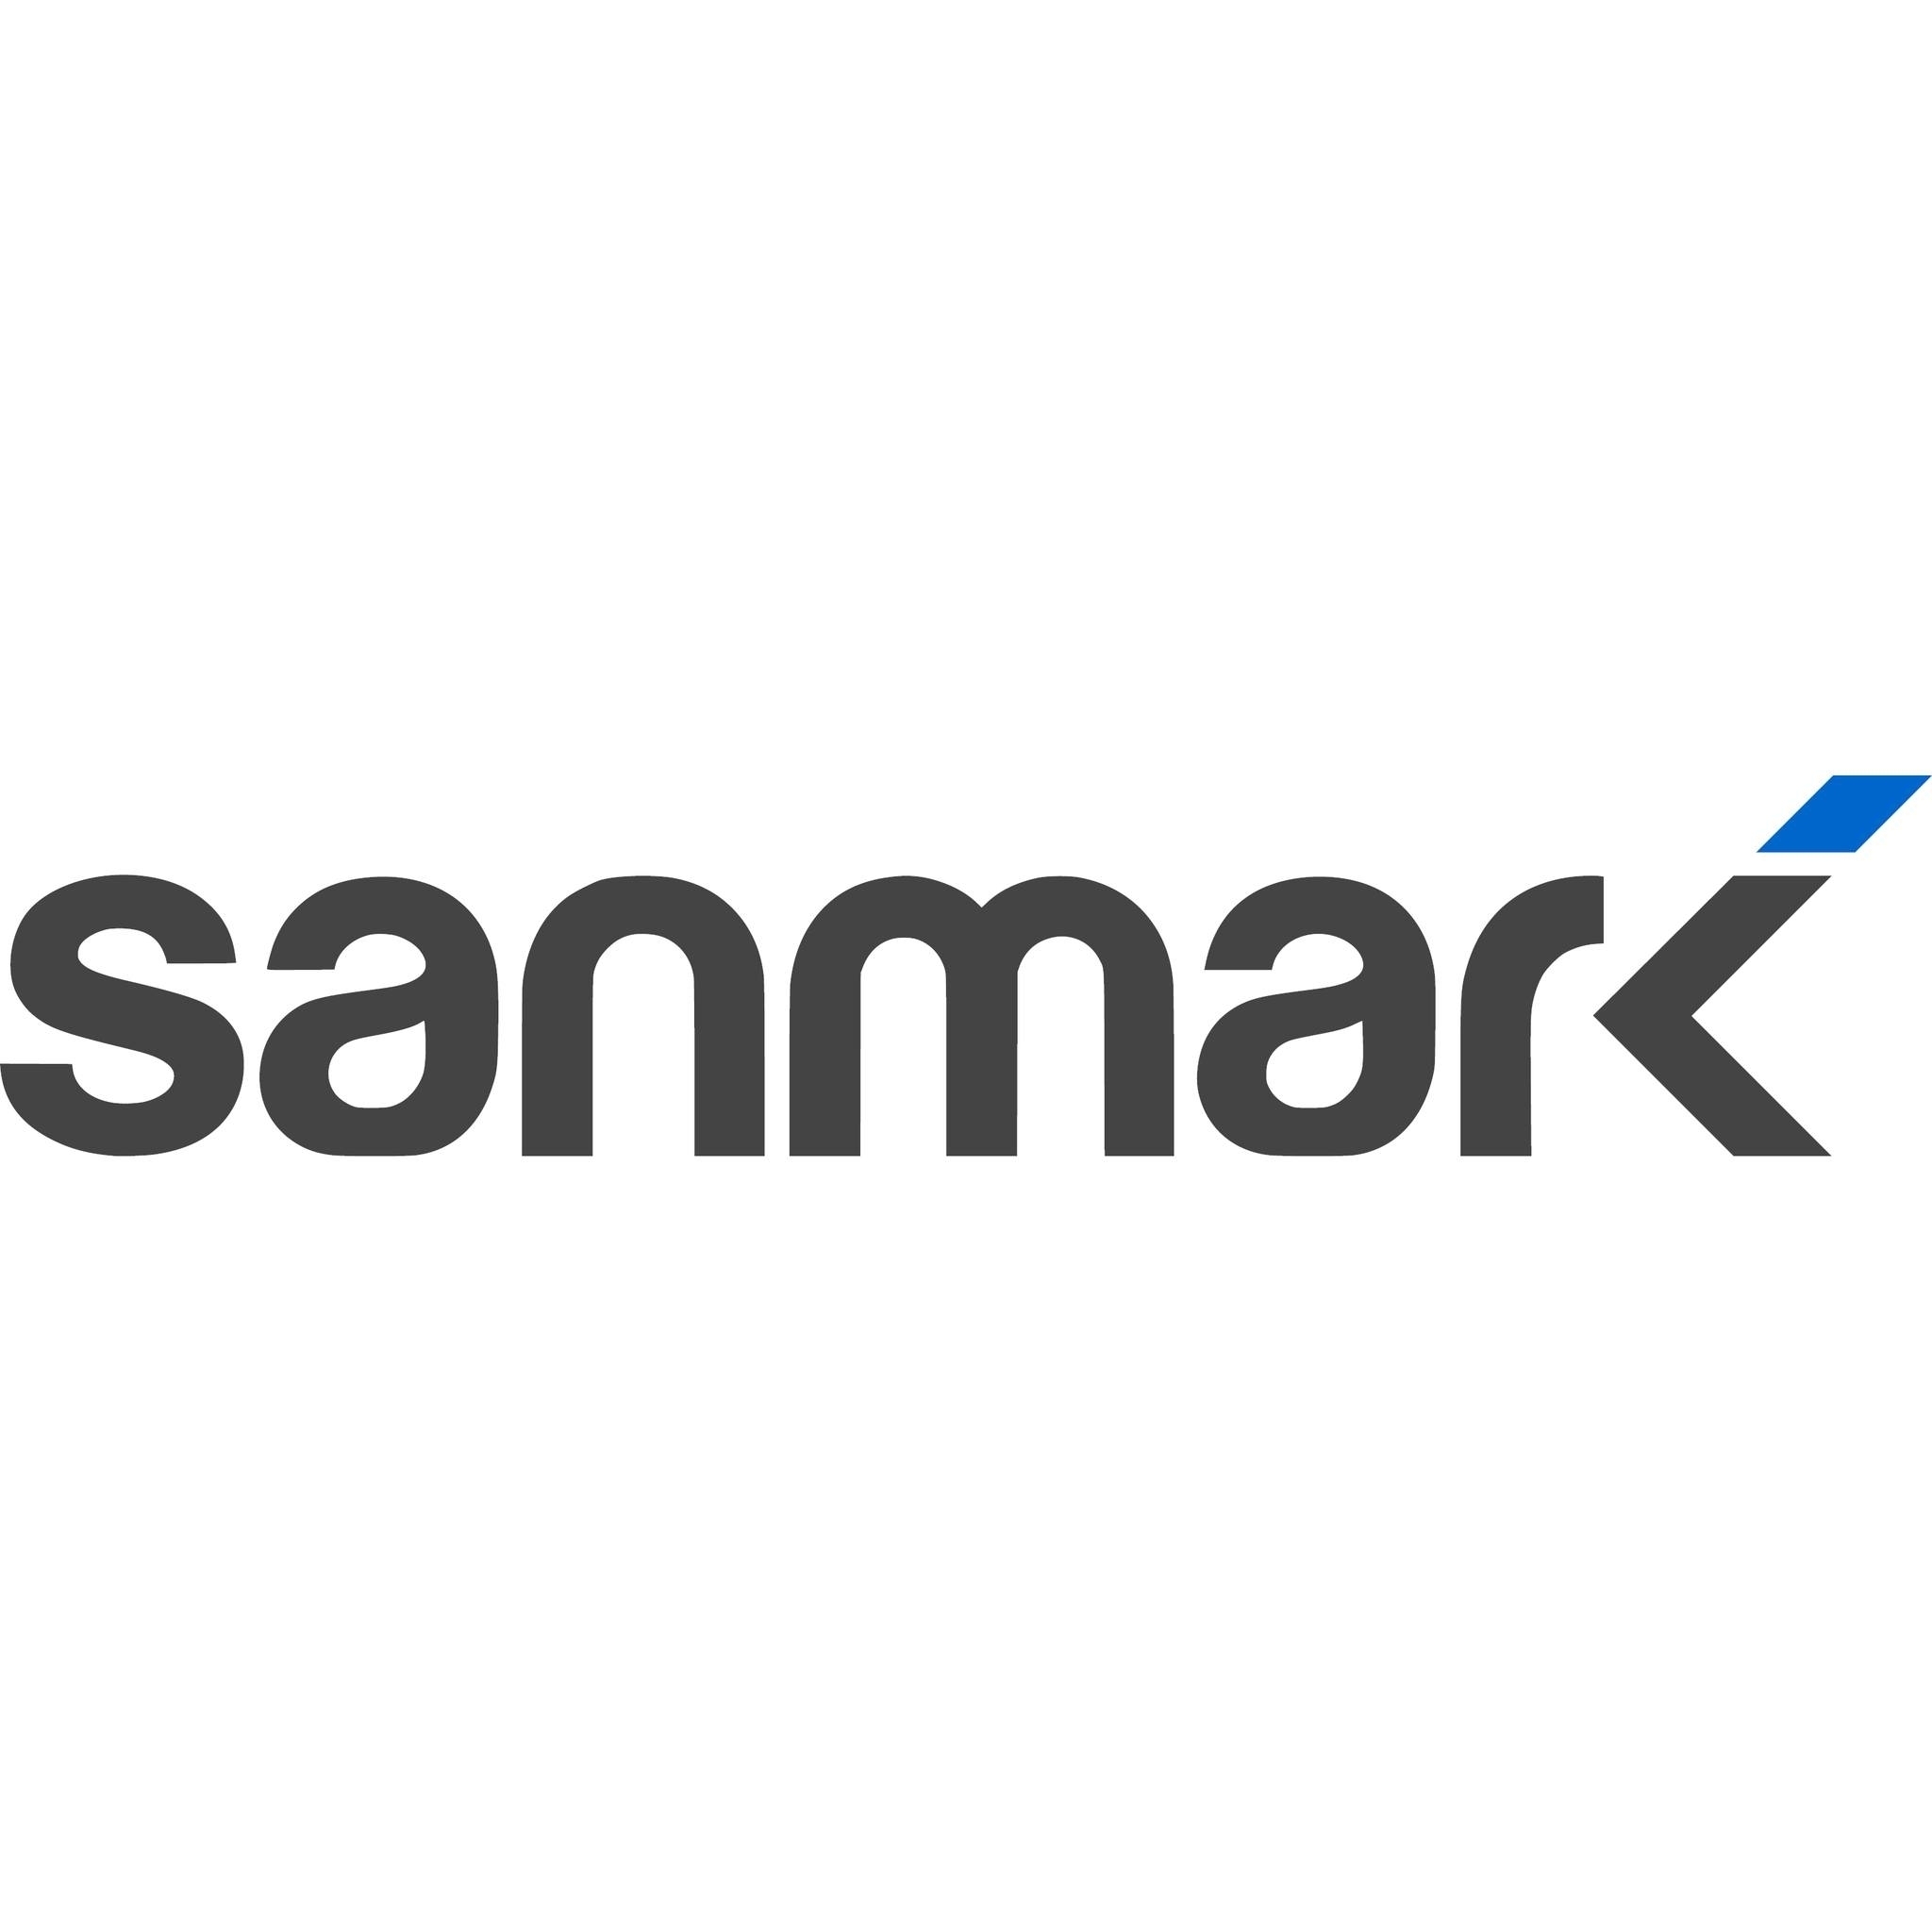 Sanmark Solutions